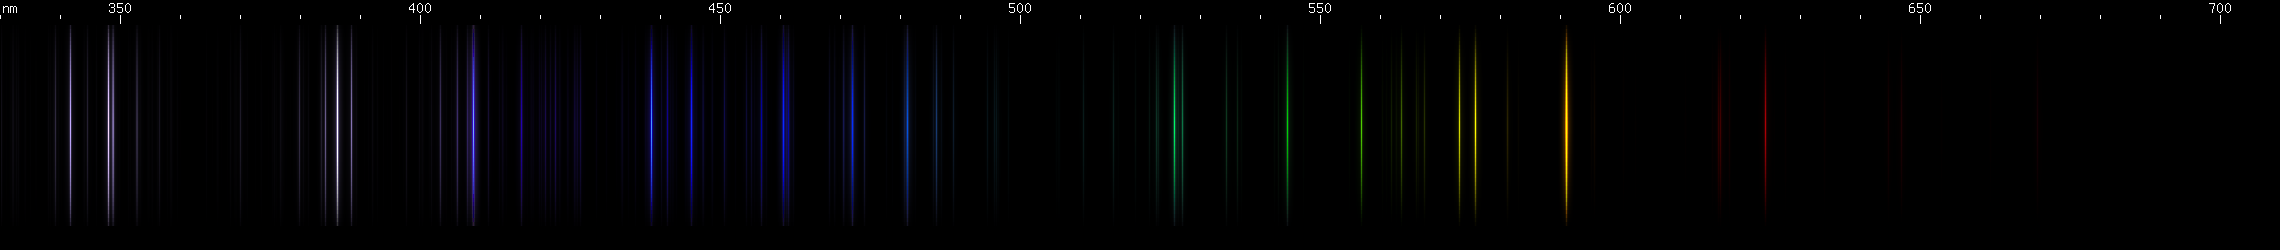 Spectral lines of Actinium.